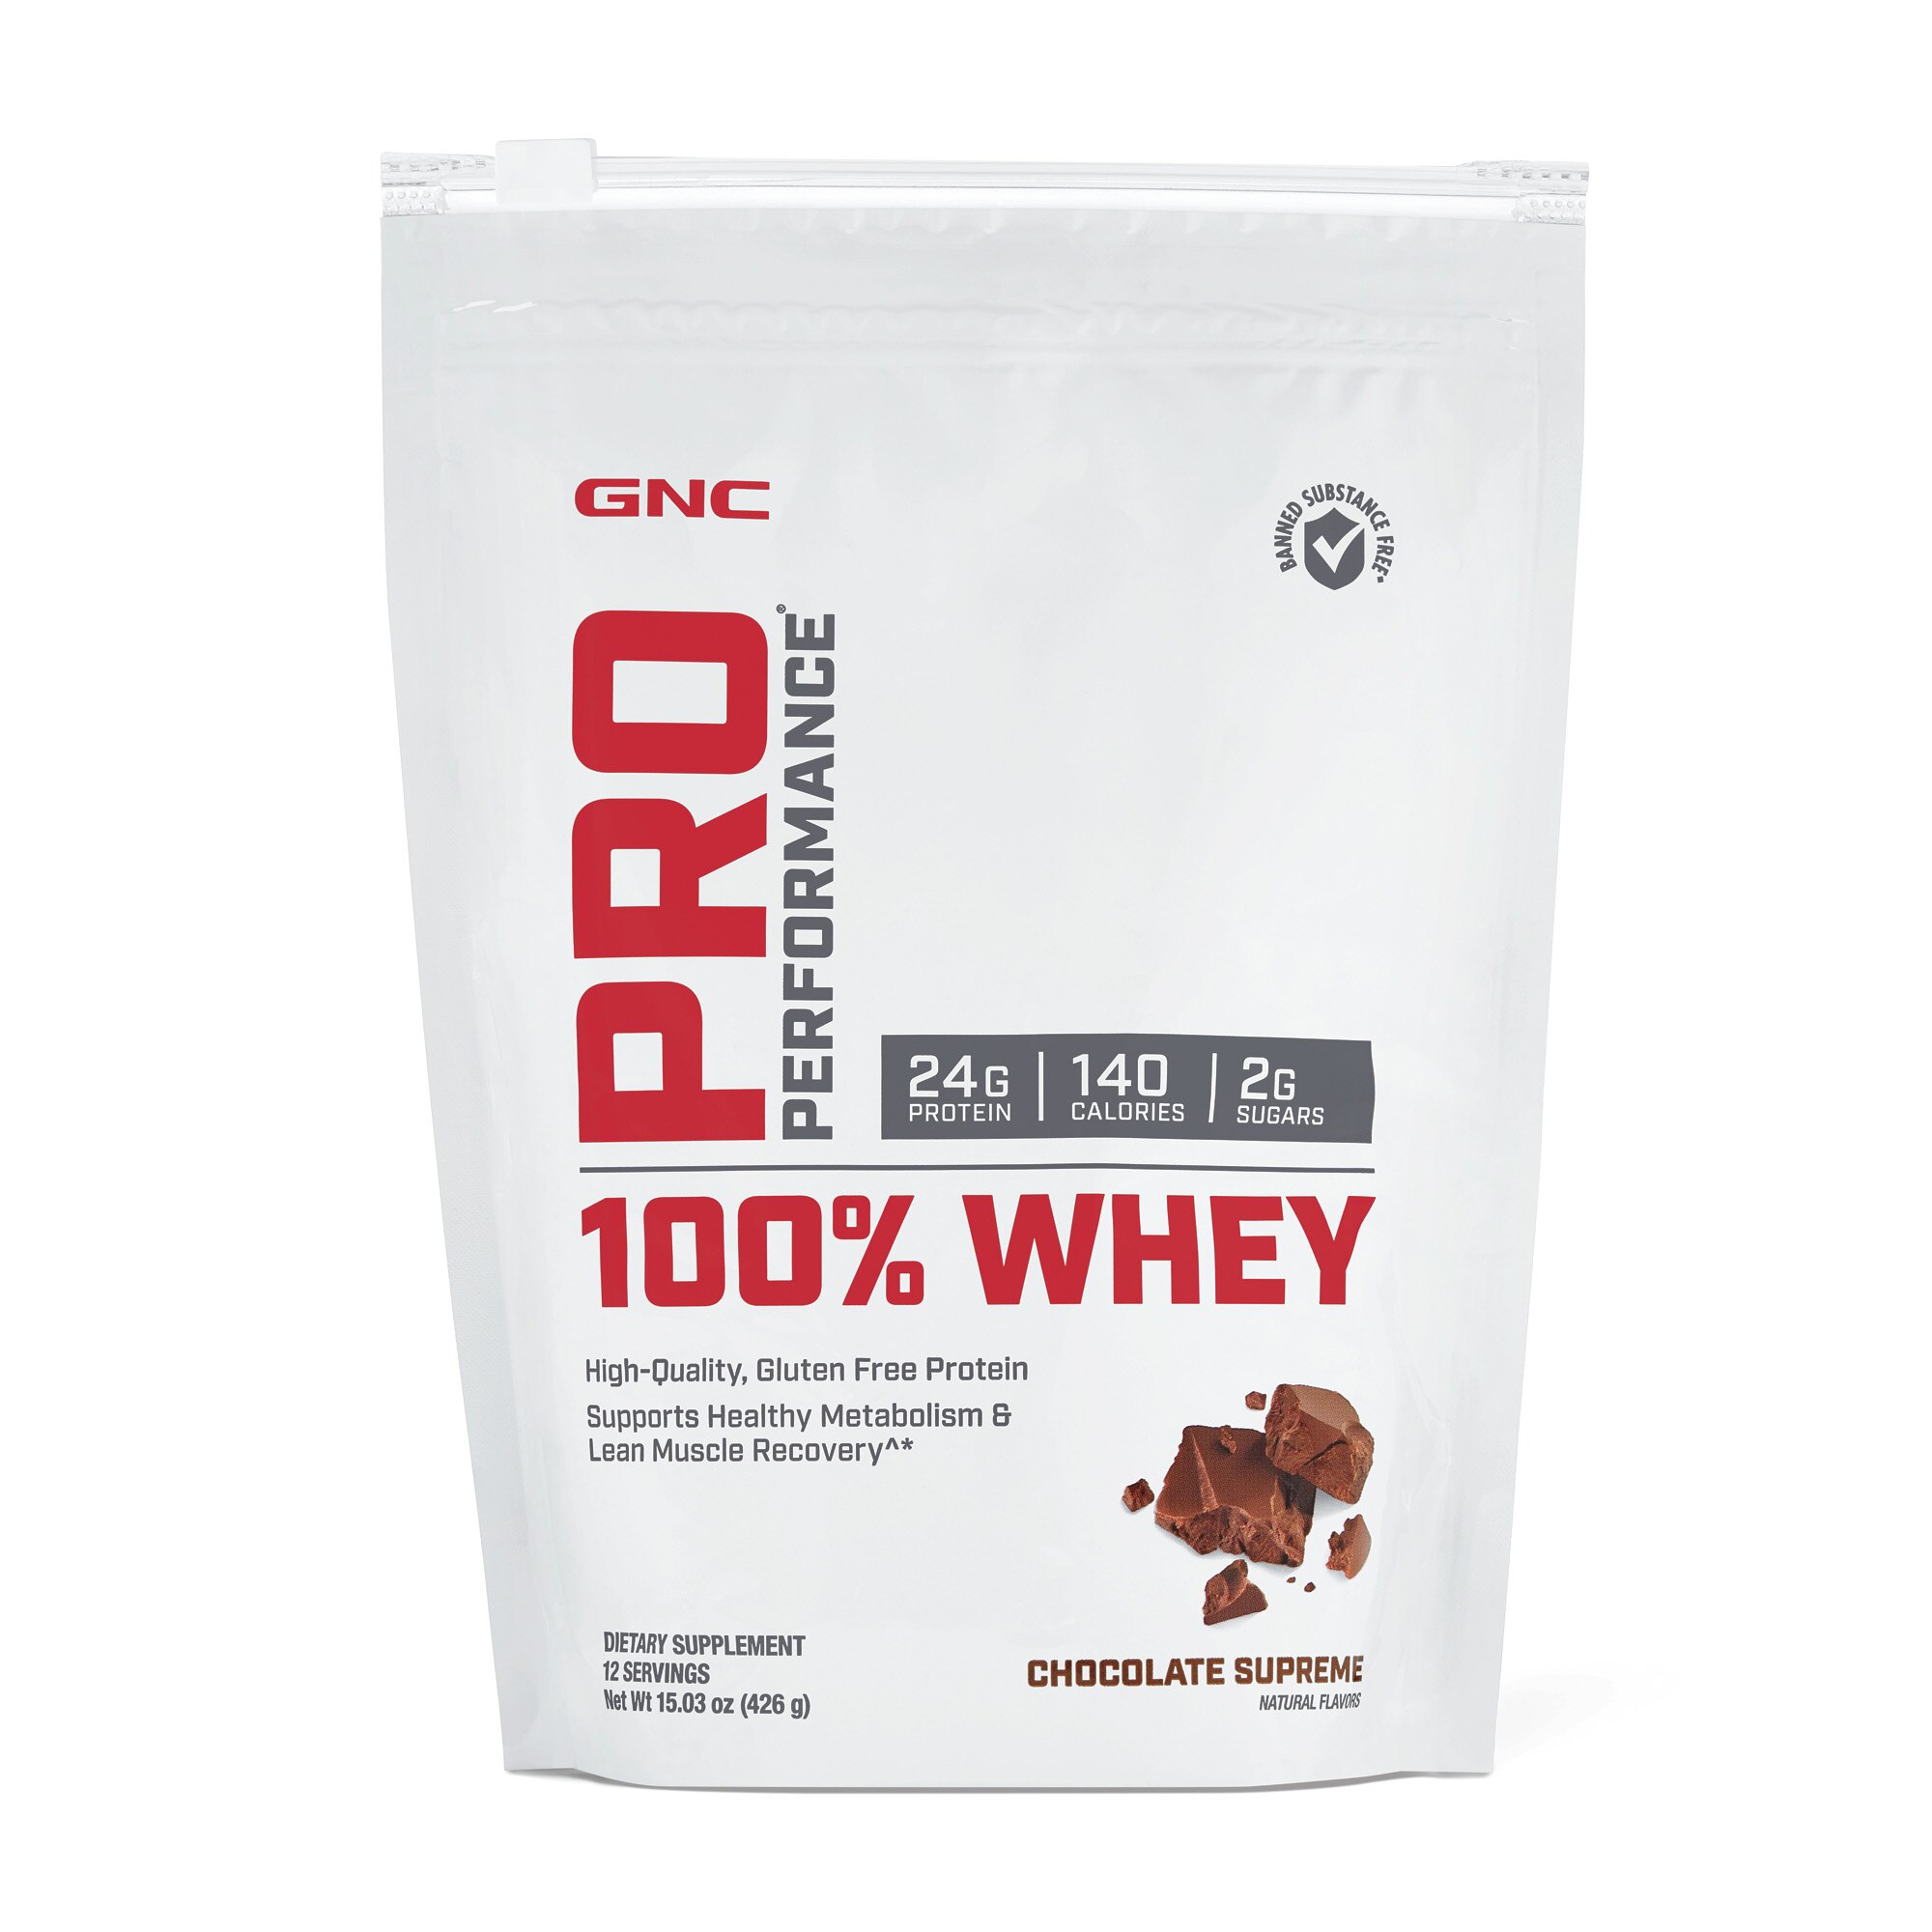 GNC Pro Performance 100% Whey Protein Powder, Chocolate Supreme, 12 Servings - 15.03 Oz , CVS